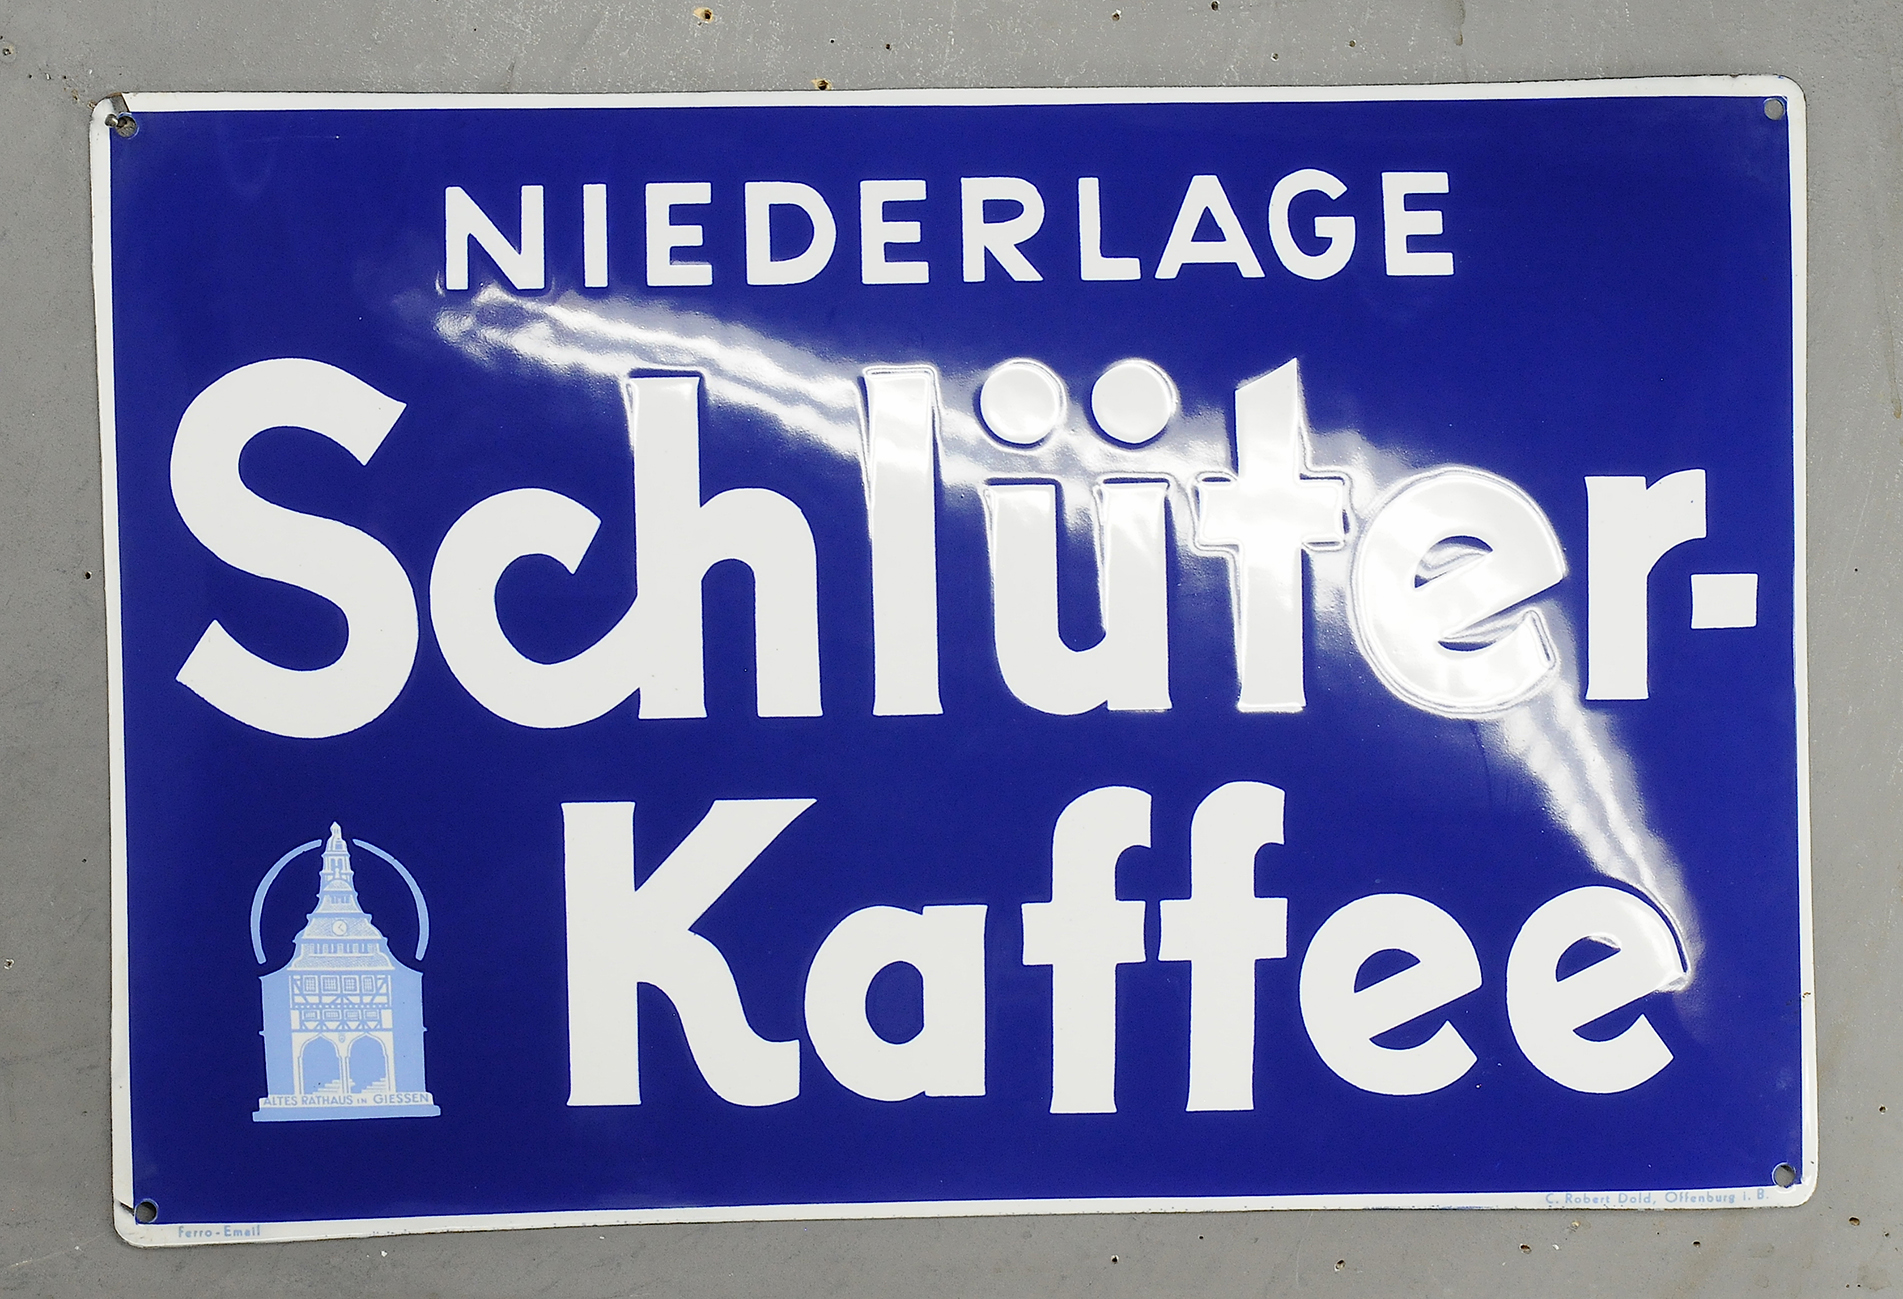 Schlüter-Kaffee - Image 3 of 3